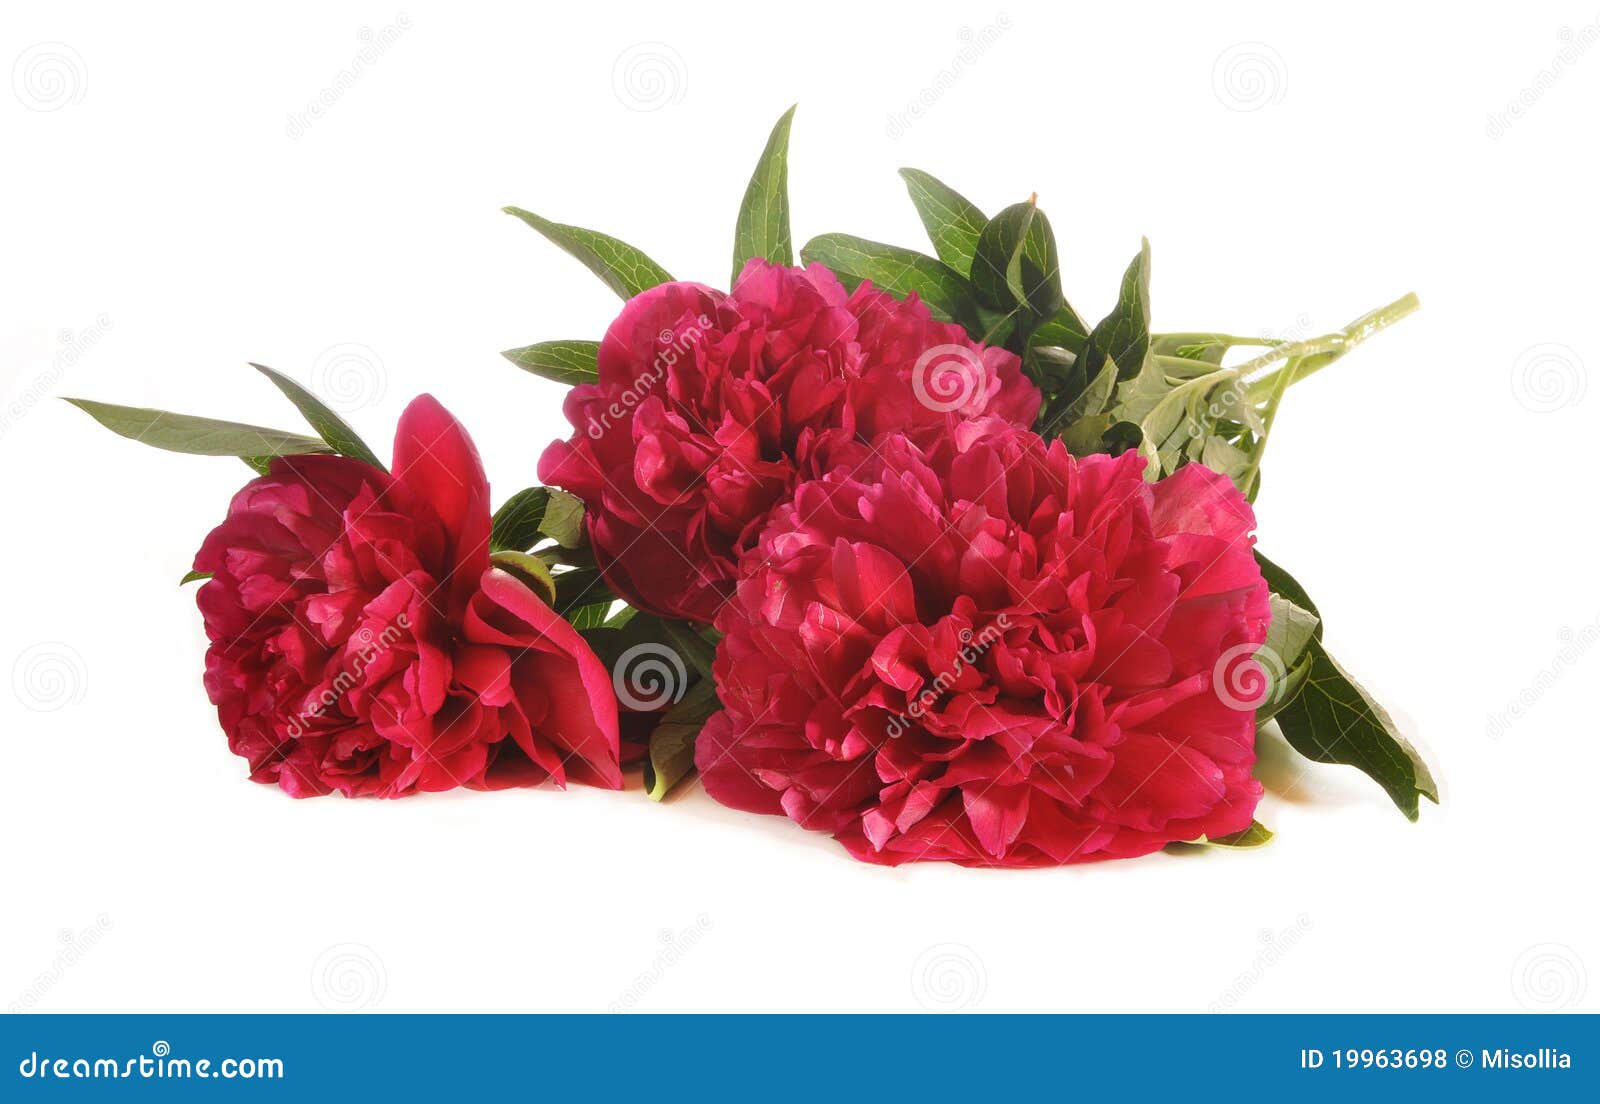 The bouquet of peonies stock photo. Image of crimson - 19963698